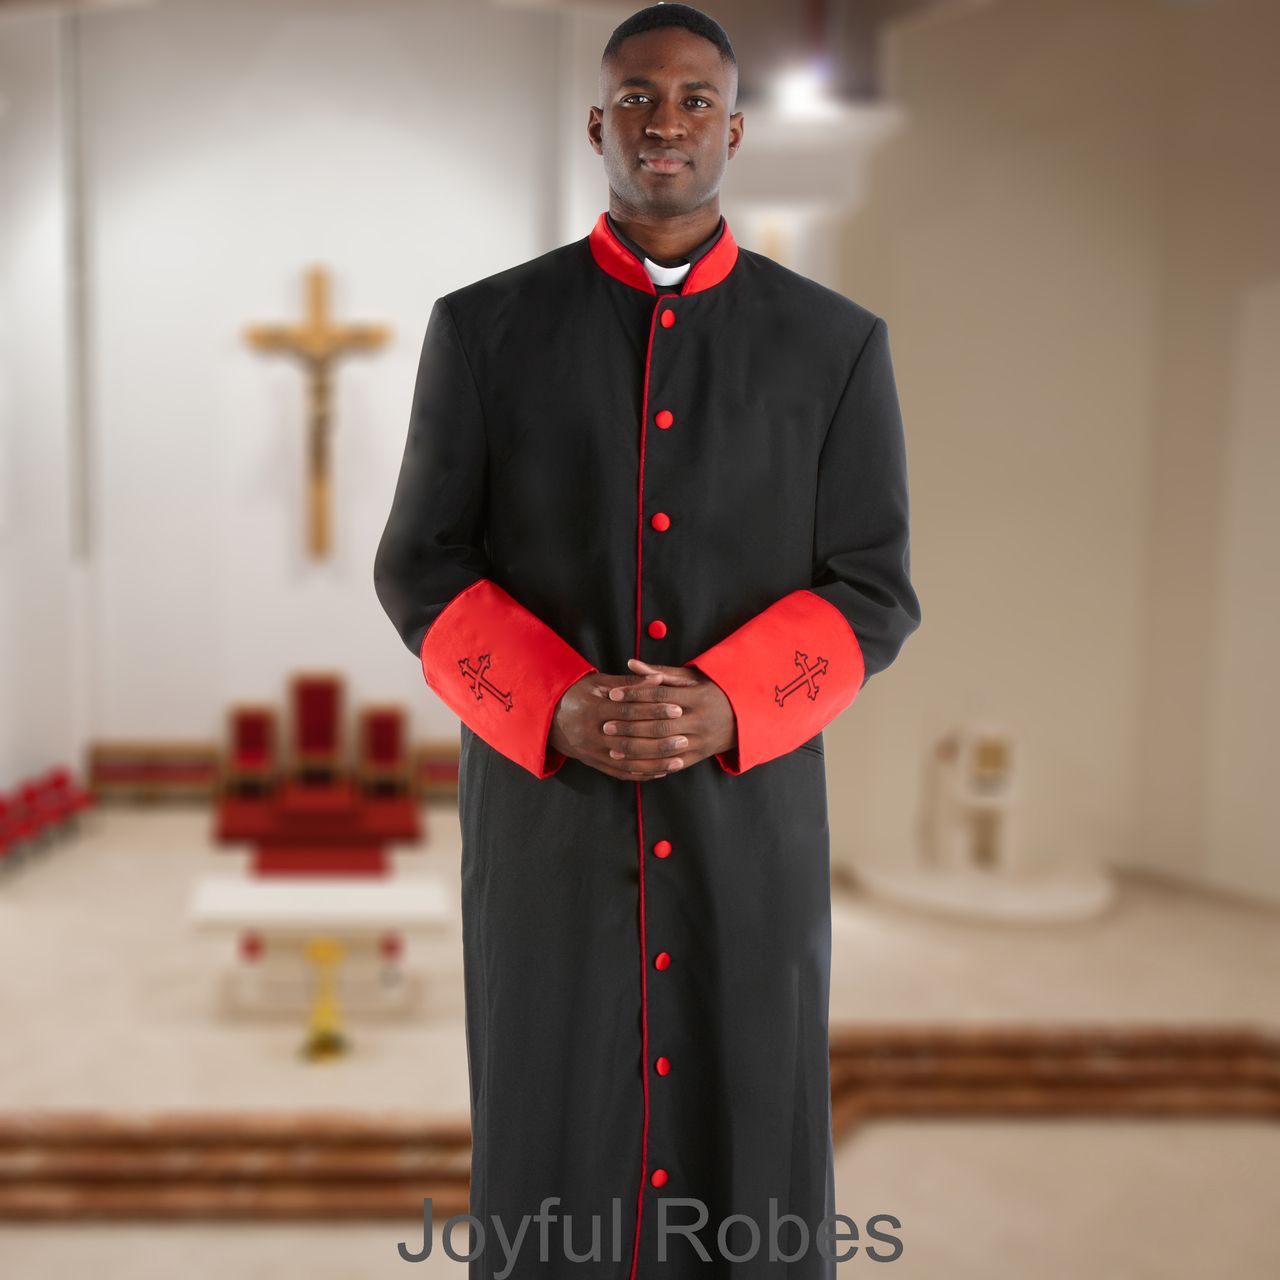 308 M. Men's Pastor/Clergy Robe - Black/Red Cuff